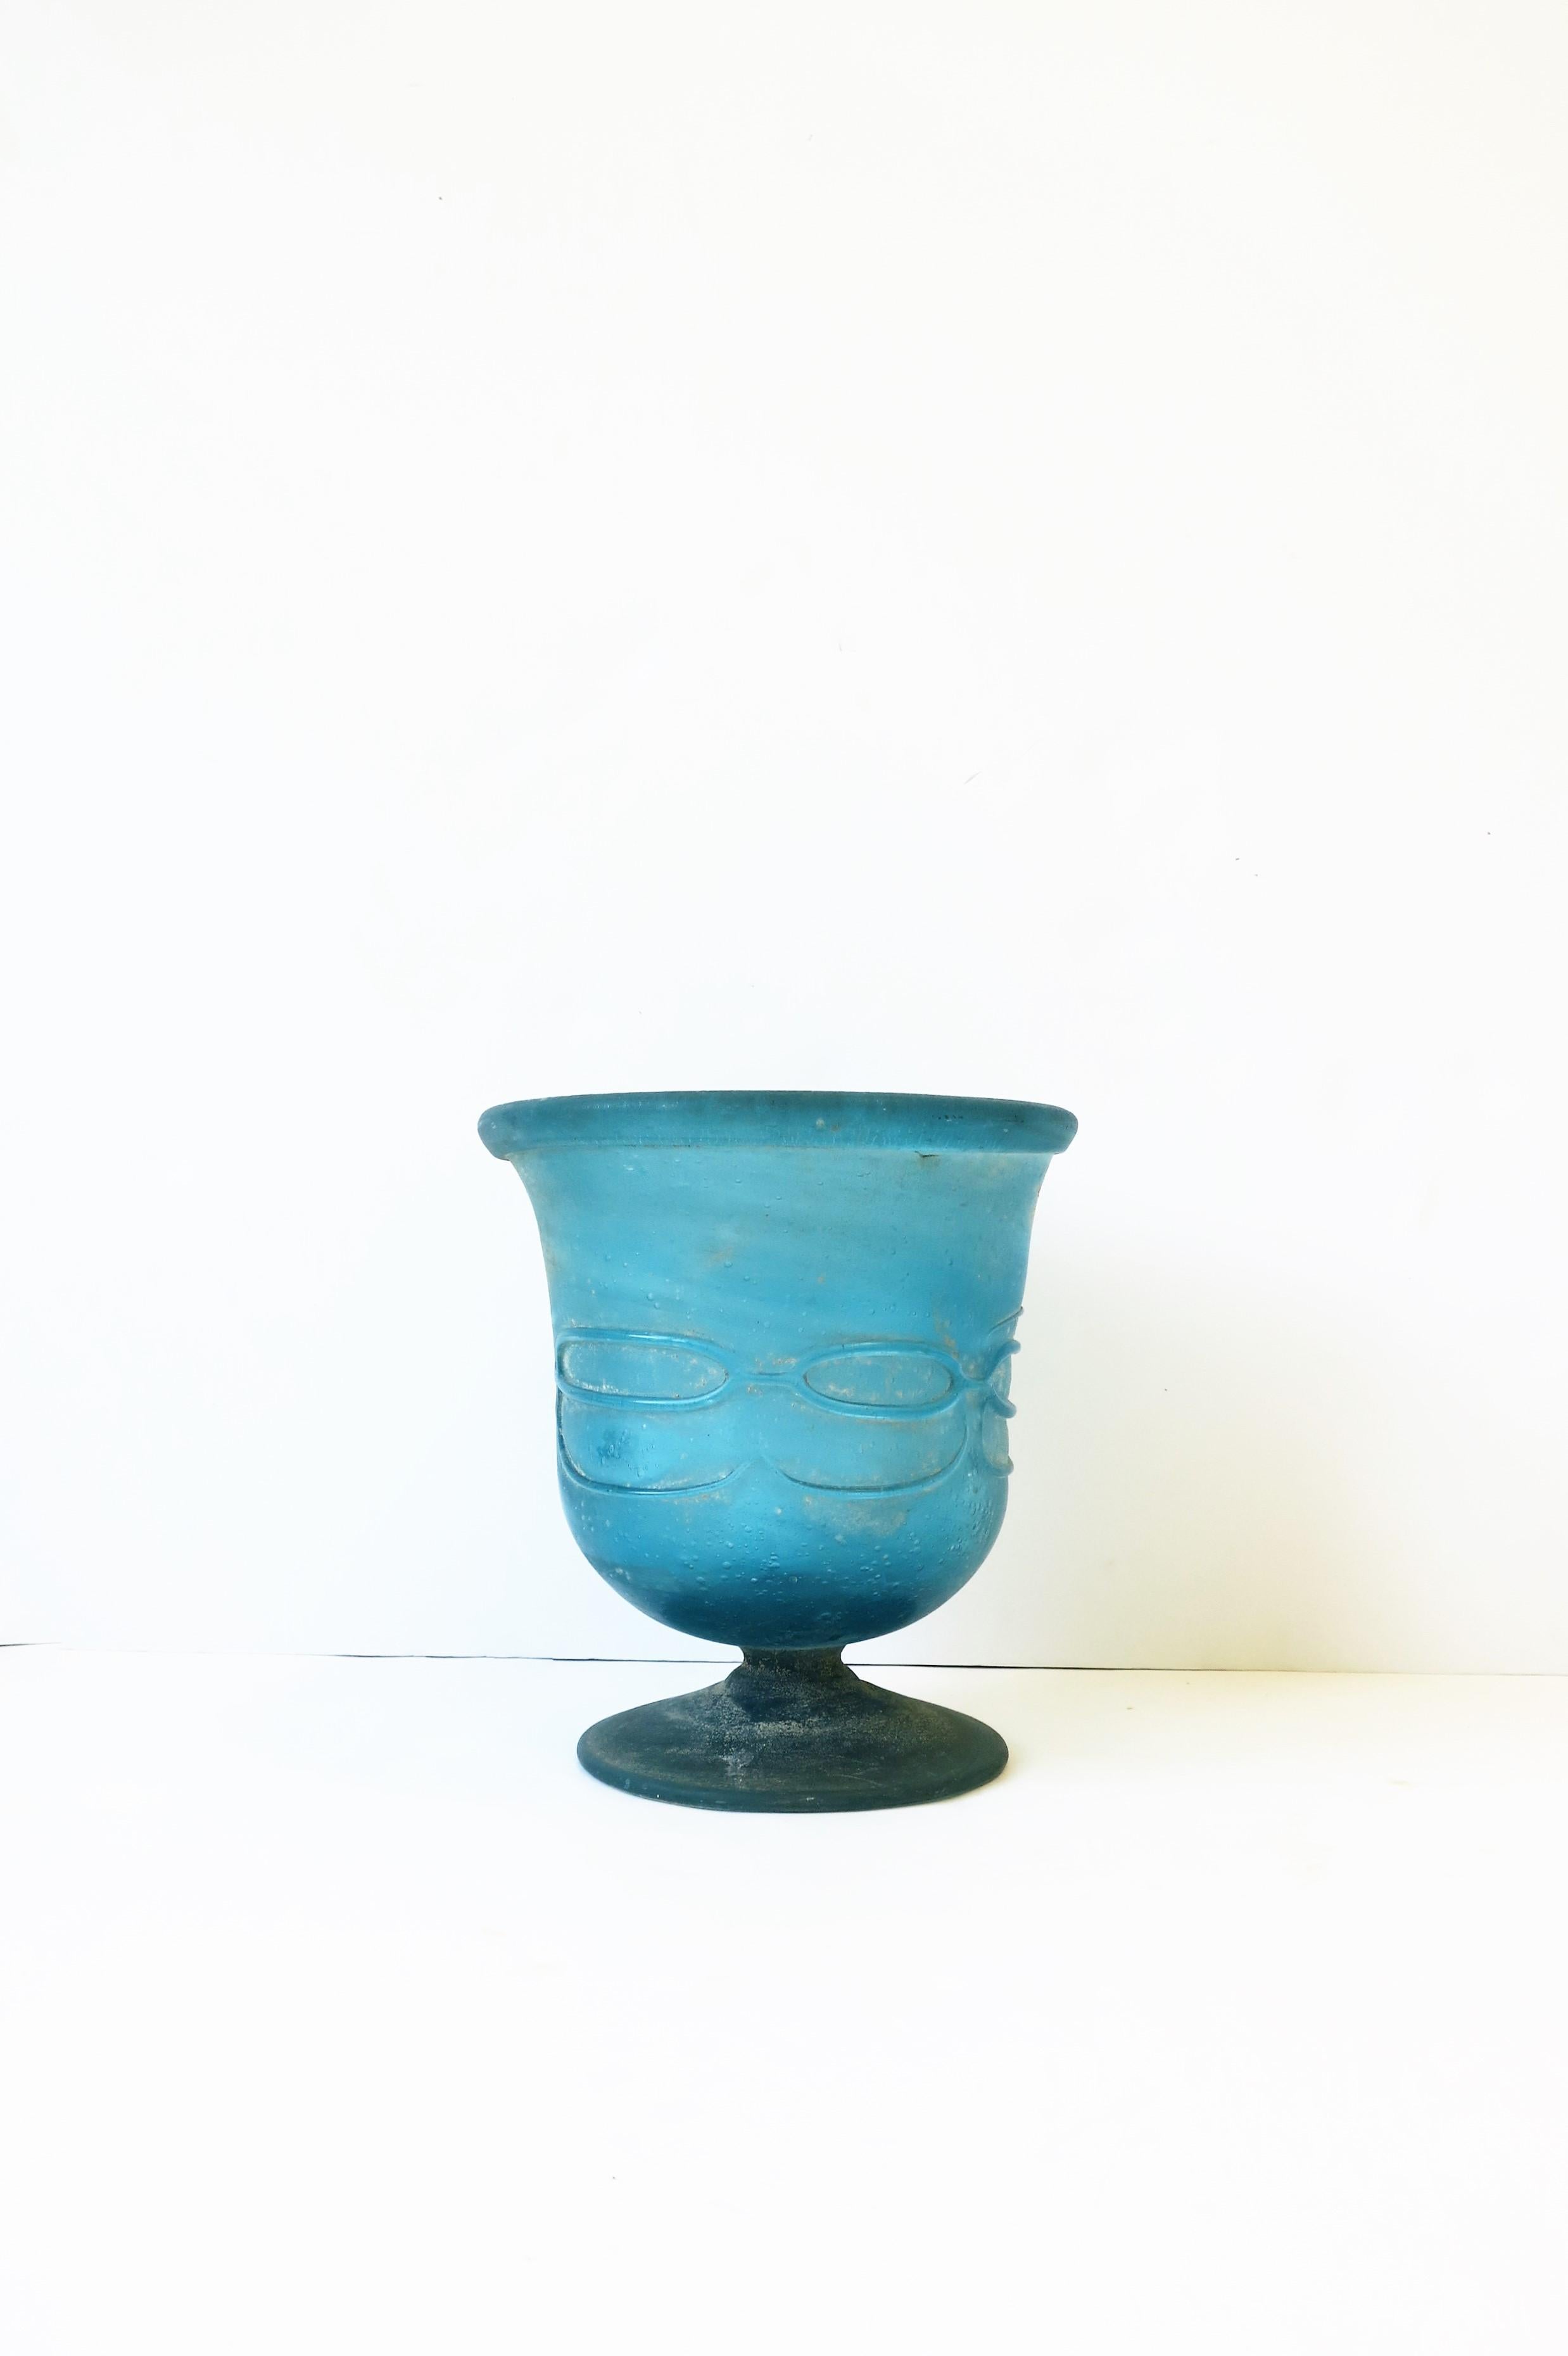 Rustic Postmodern Italian Scavo Blue Art Glass Urn Vase Vessel